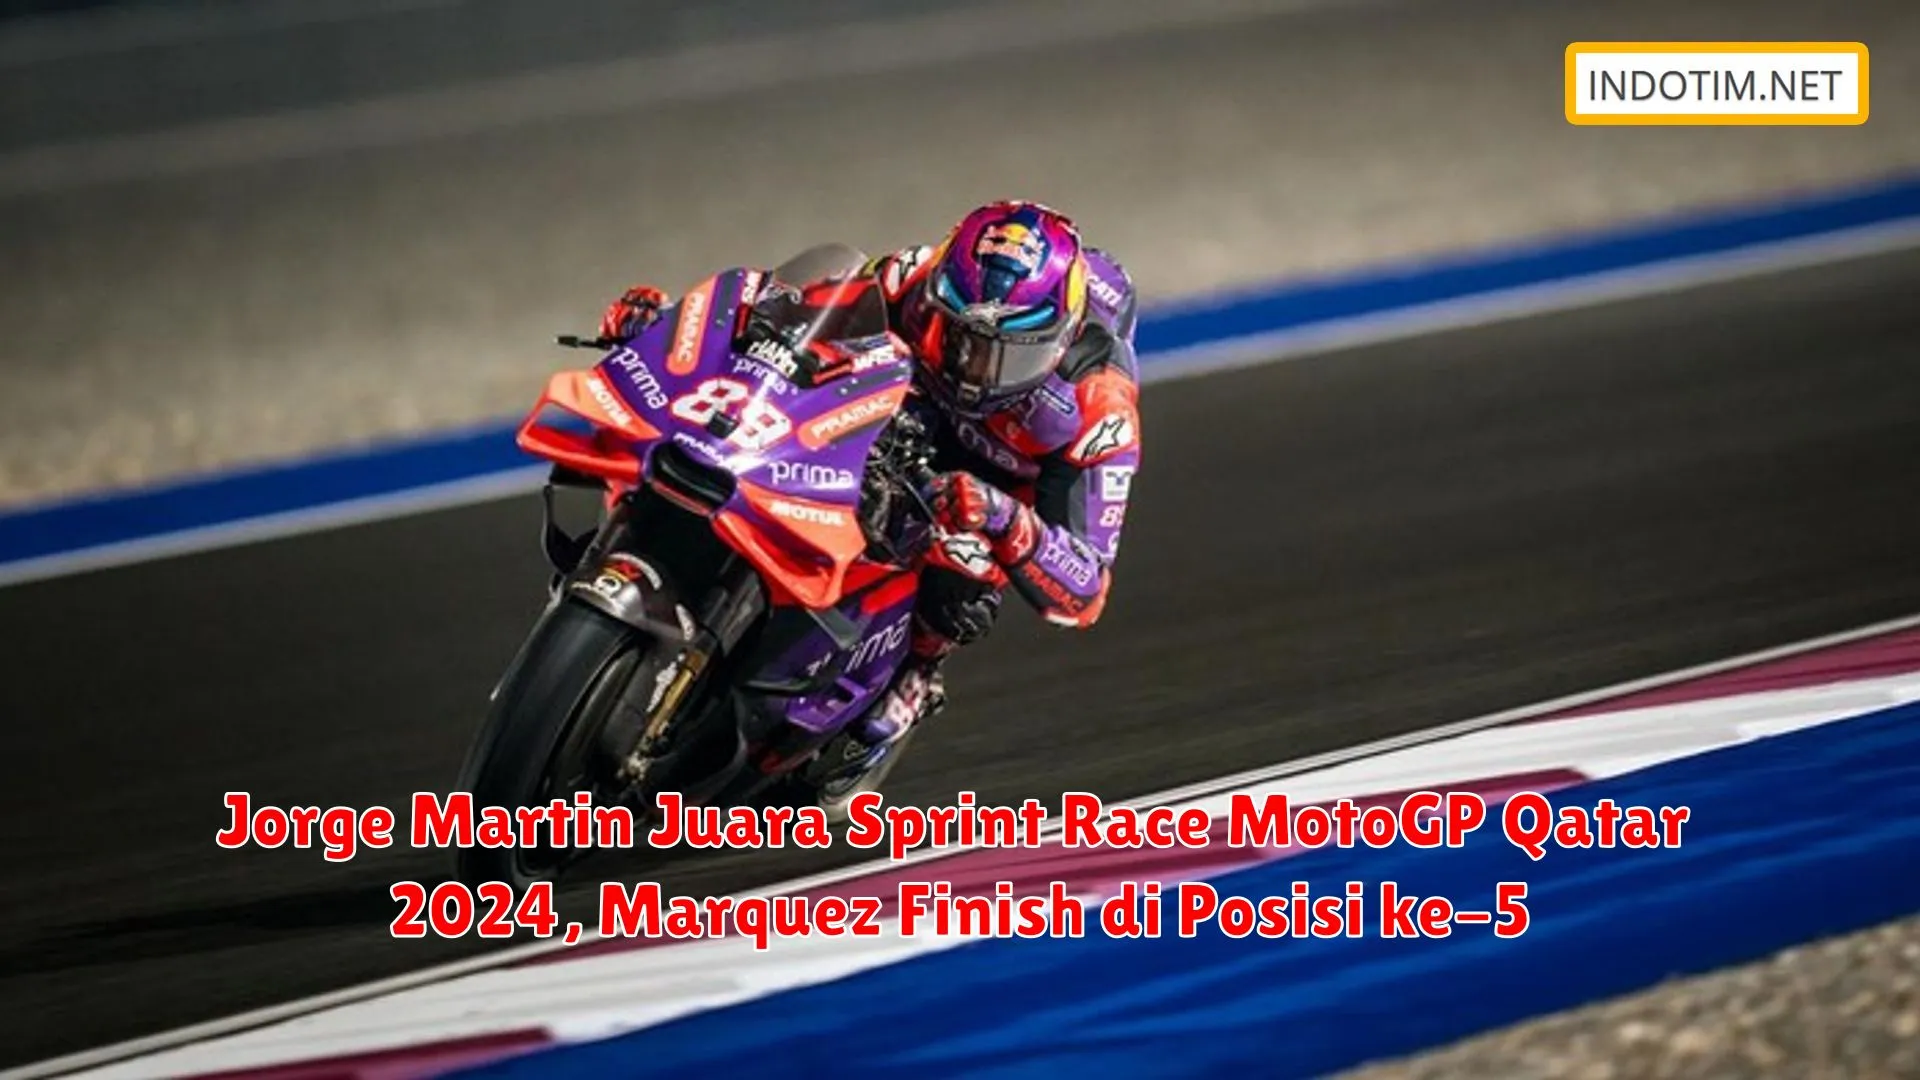 Jorge Martin Juara Sprint Race MotoGP Qatar 2024, Marquez Finish di Posisi ke-5